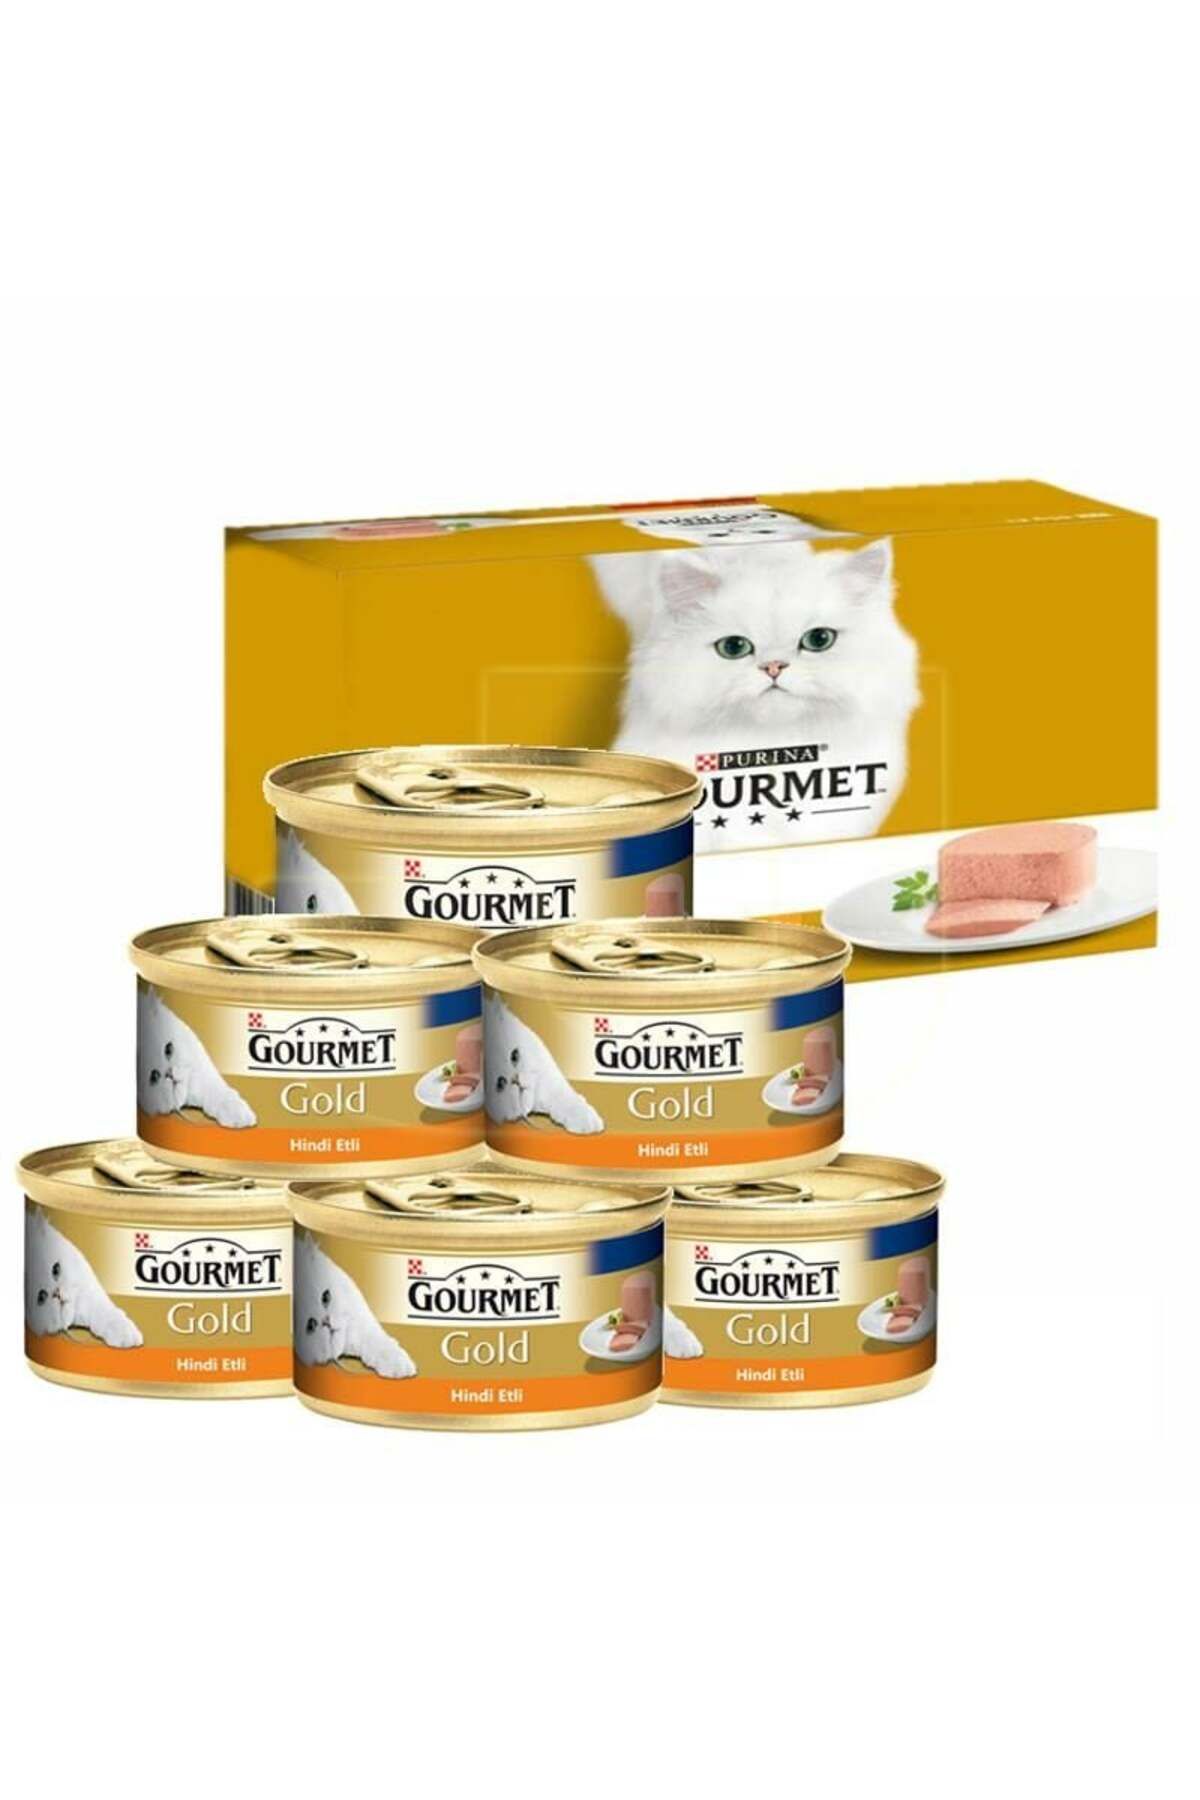 Gourmet Gold Kıyılmış Hindili Yetişkin Konserve Kedi Maması 6x85 gr Paket